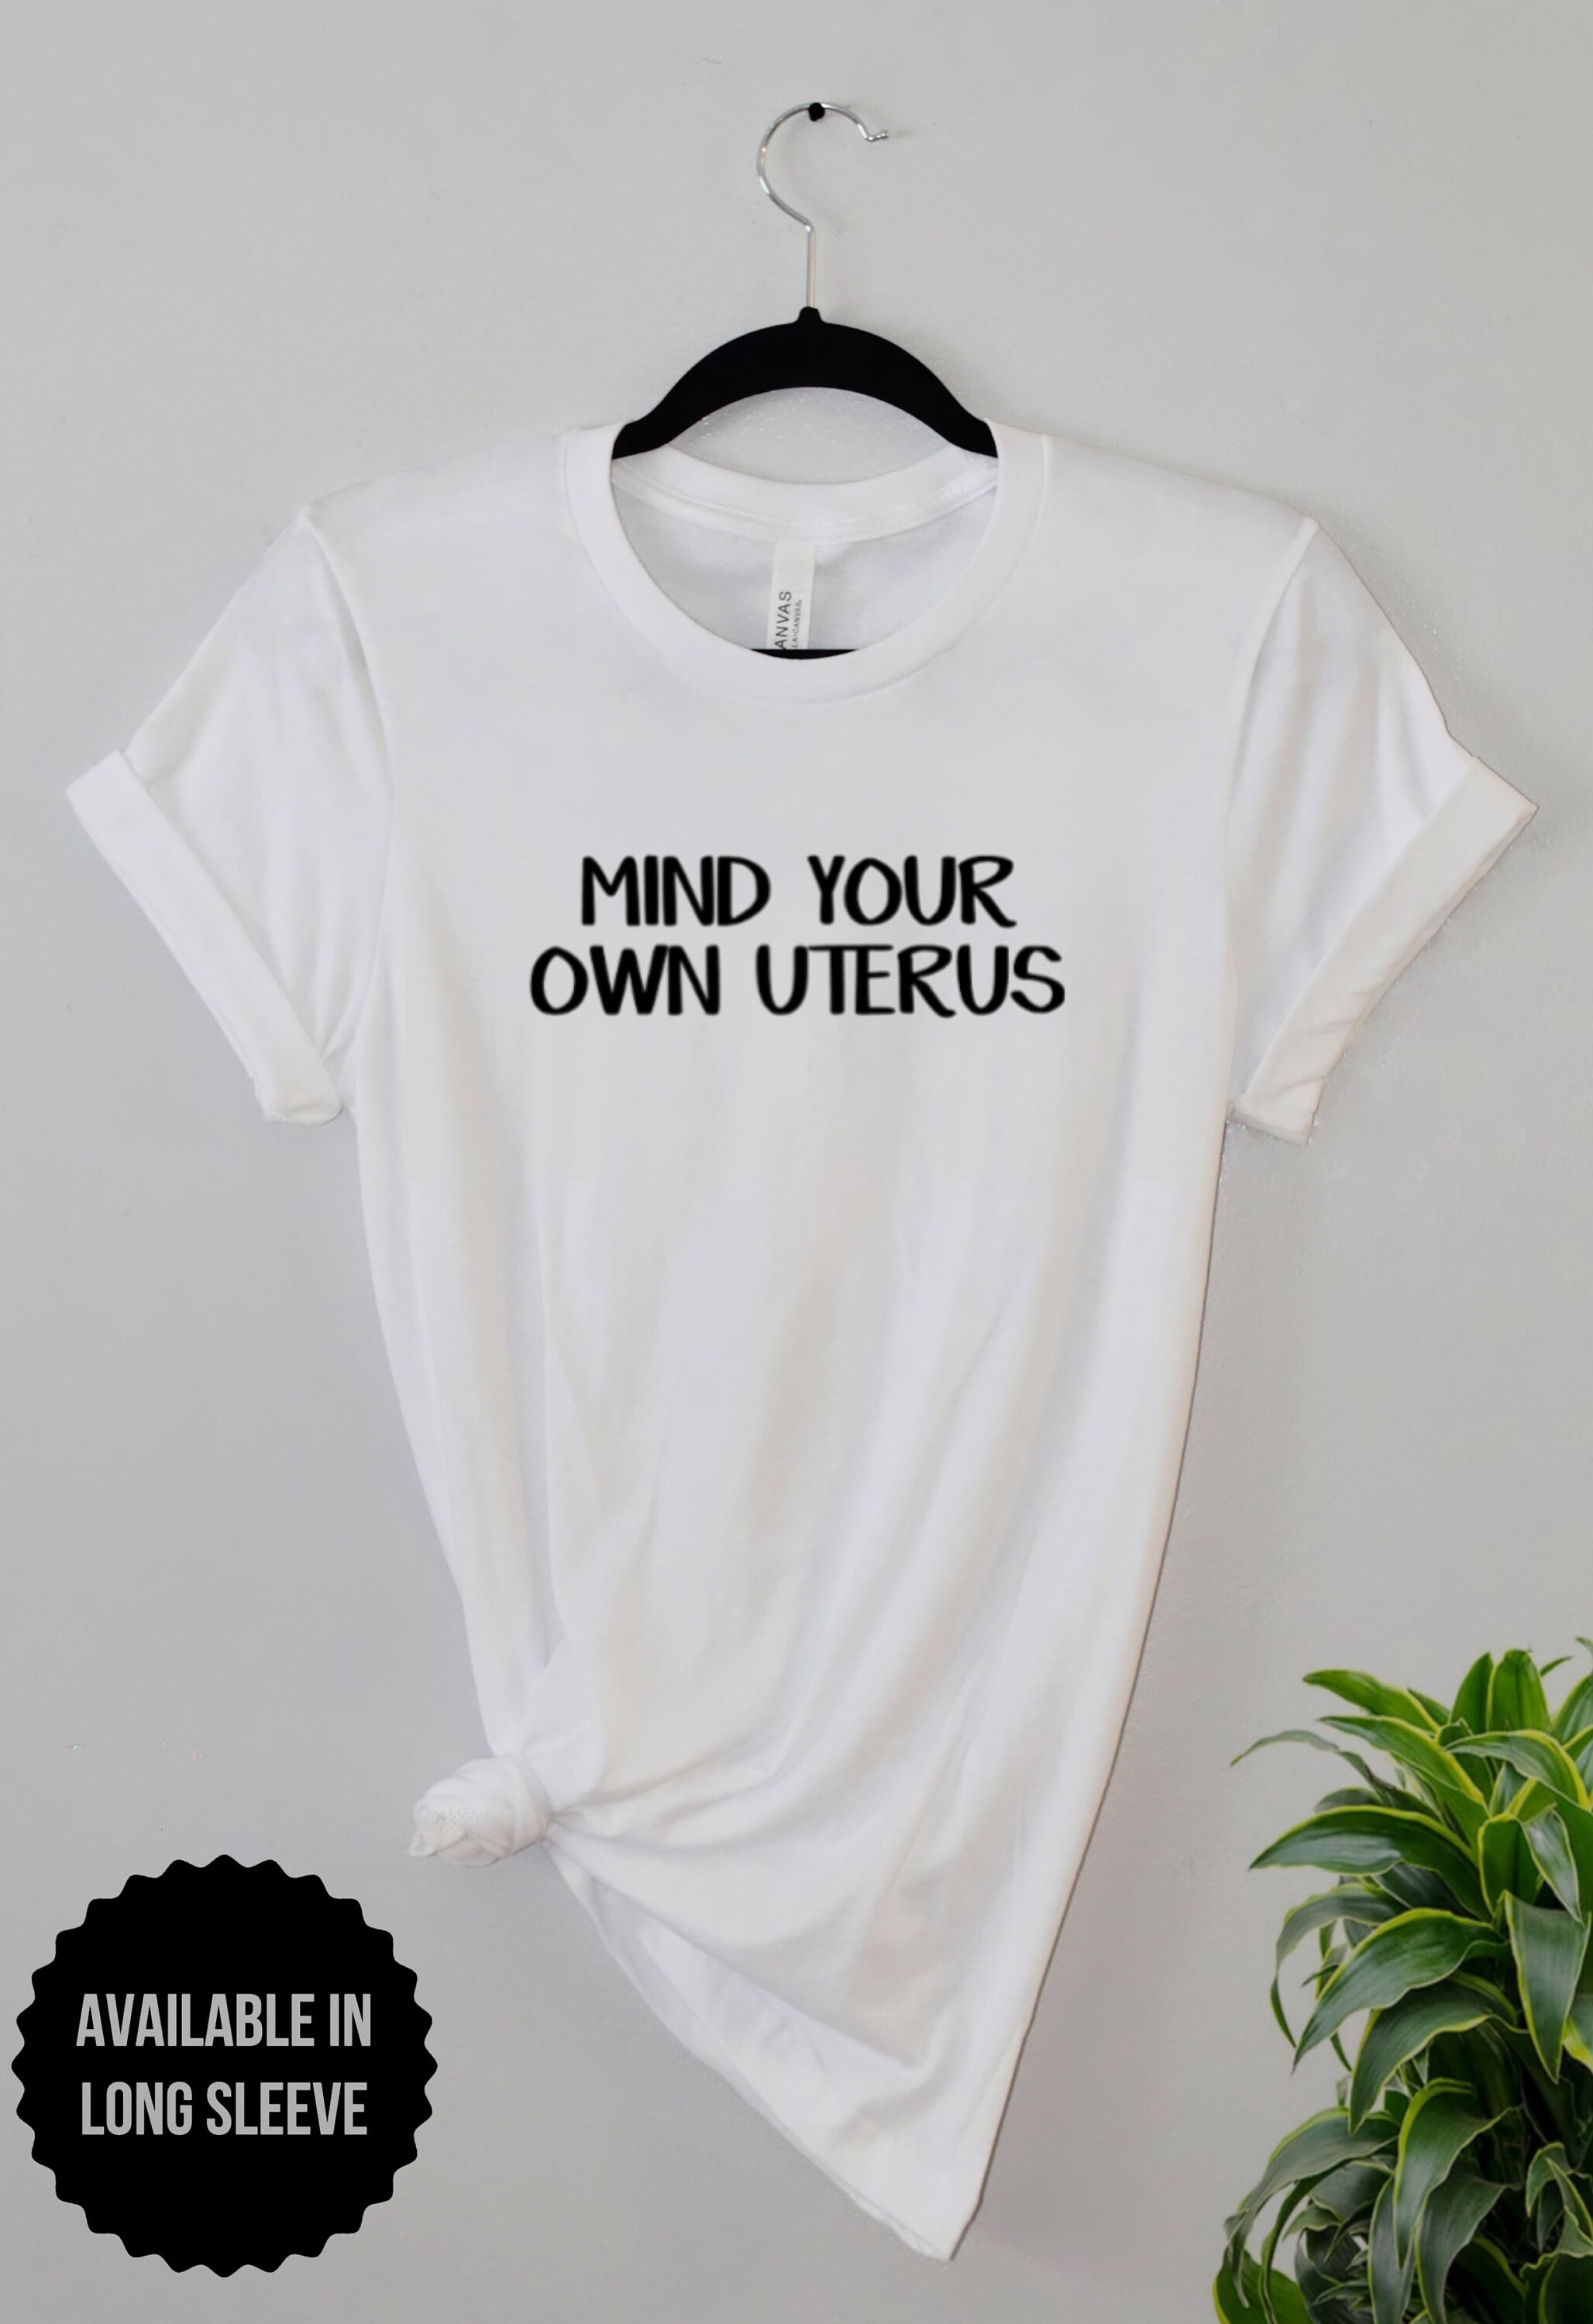 Mind your own Uterus shirt pro choice womens rights White shirt